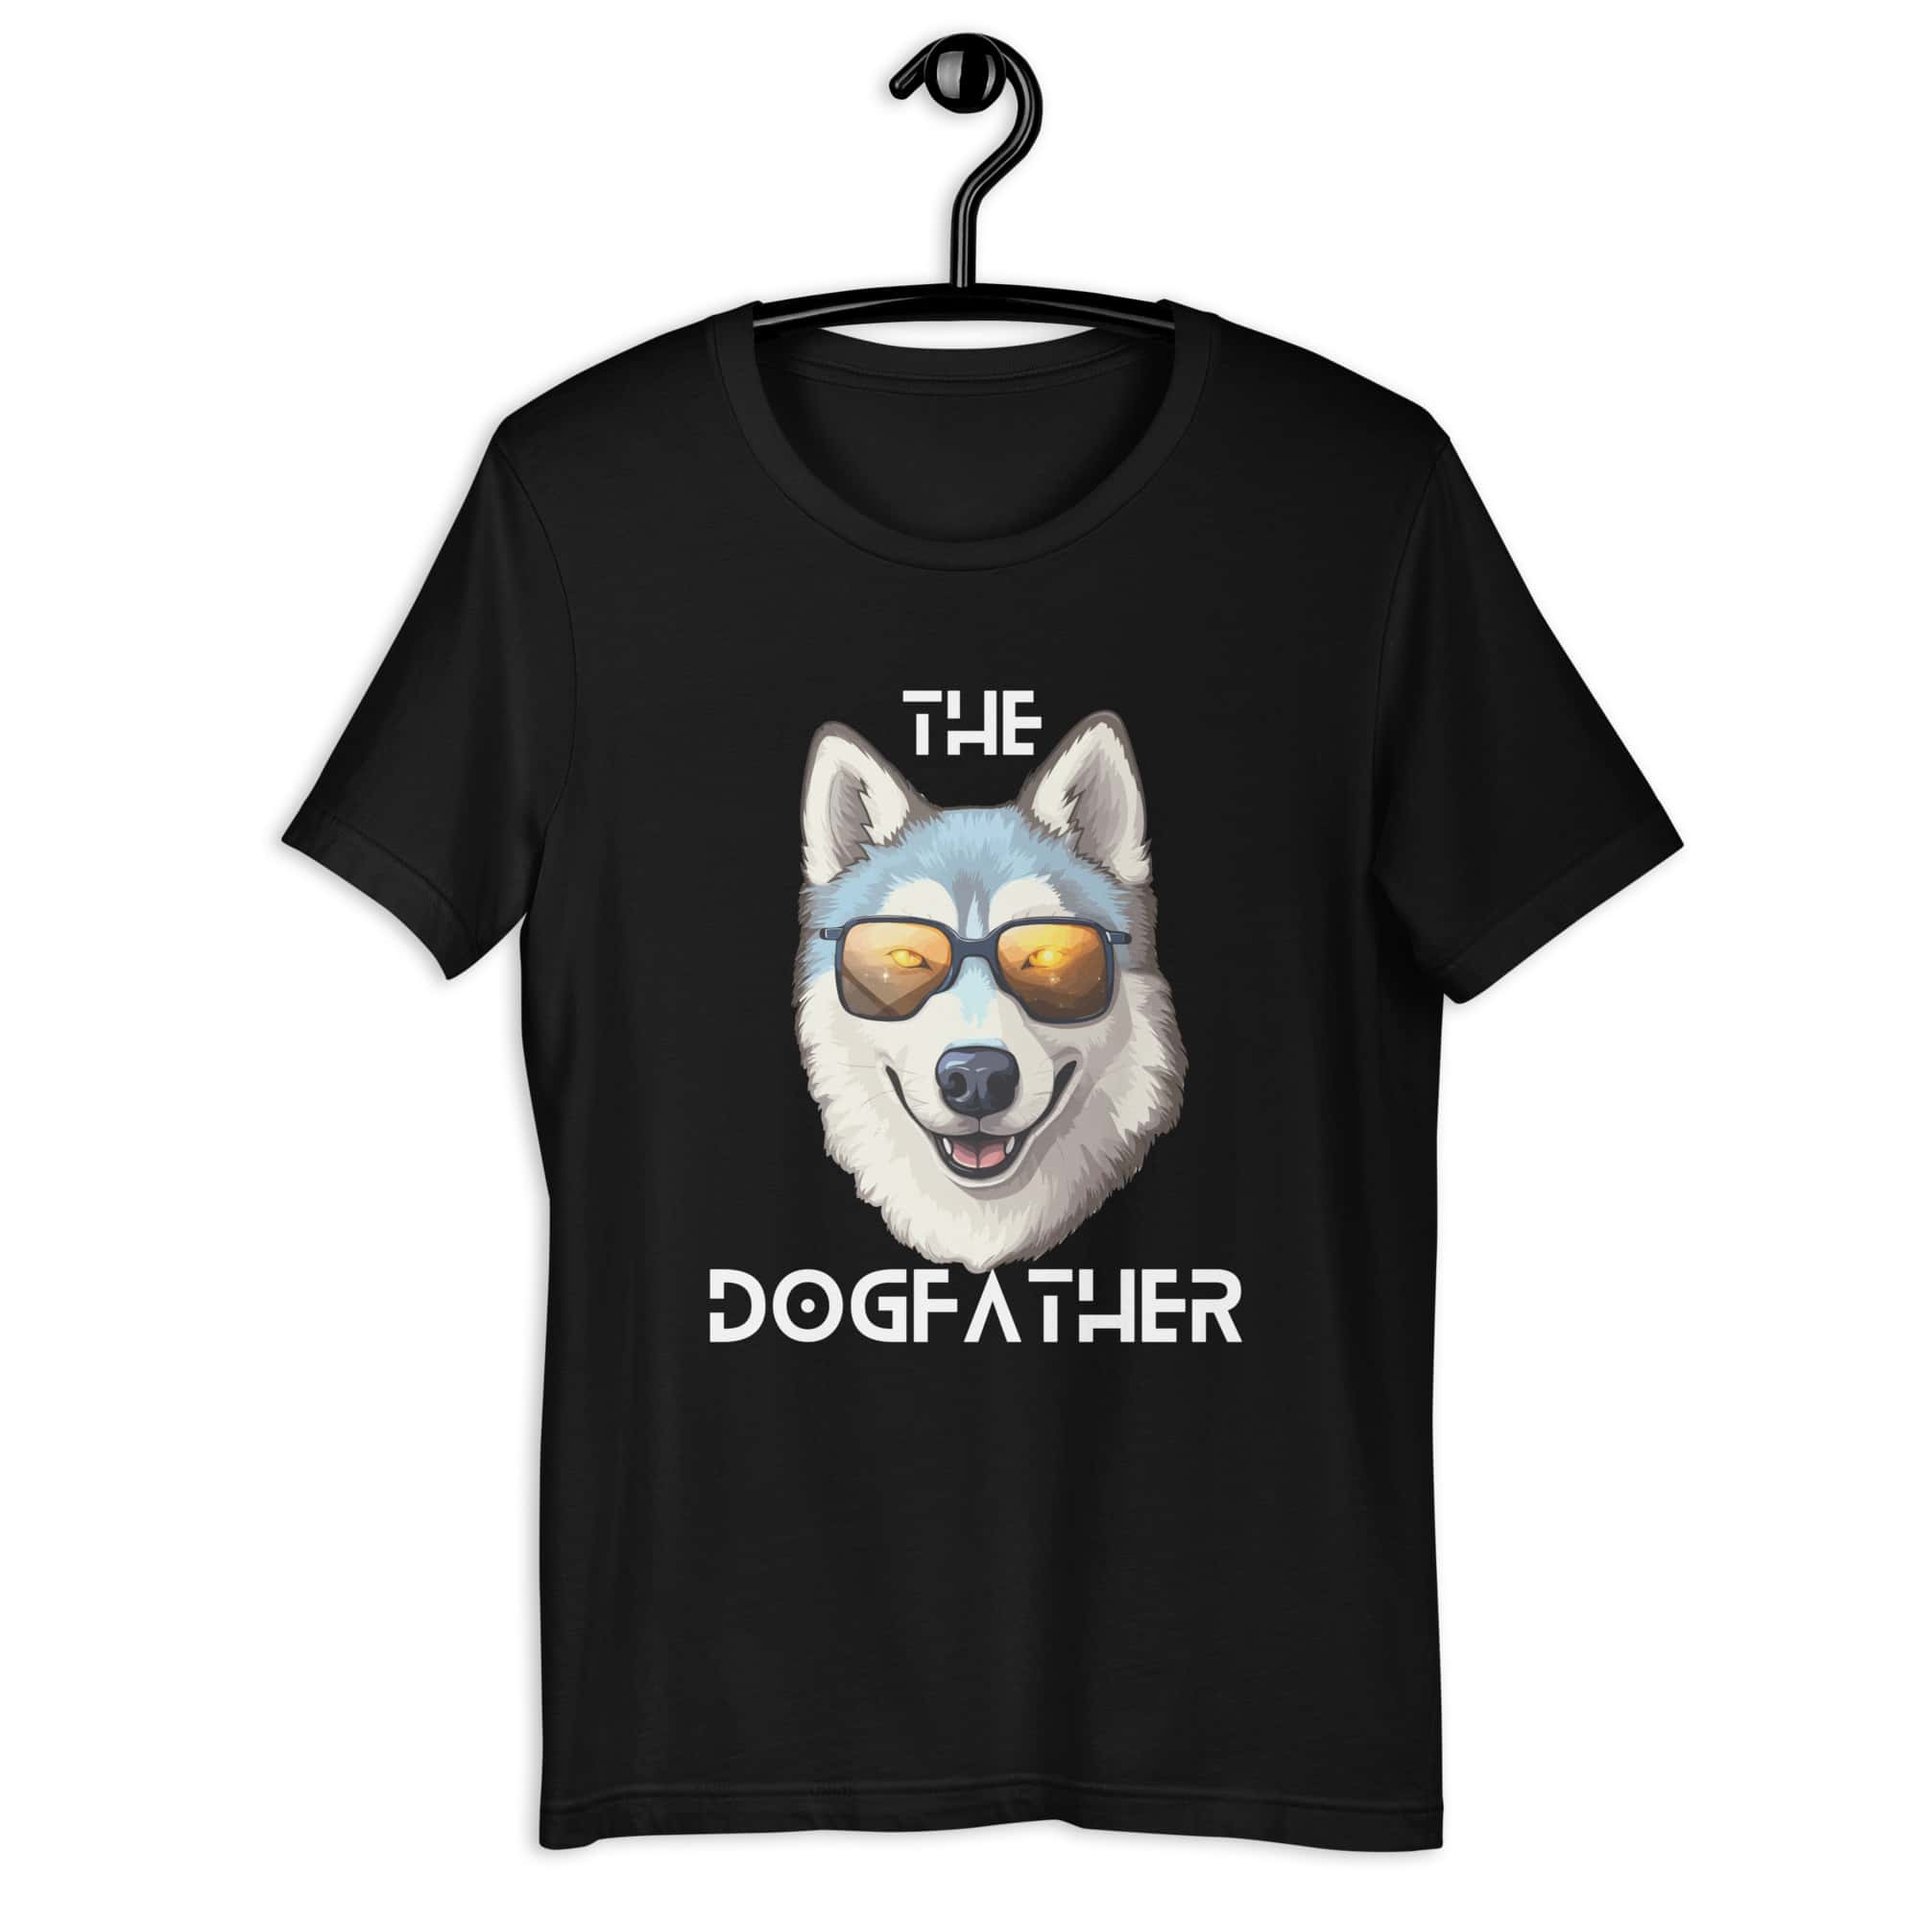 The Dogfather Huskies Unisex T-Shirt. Black